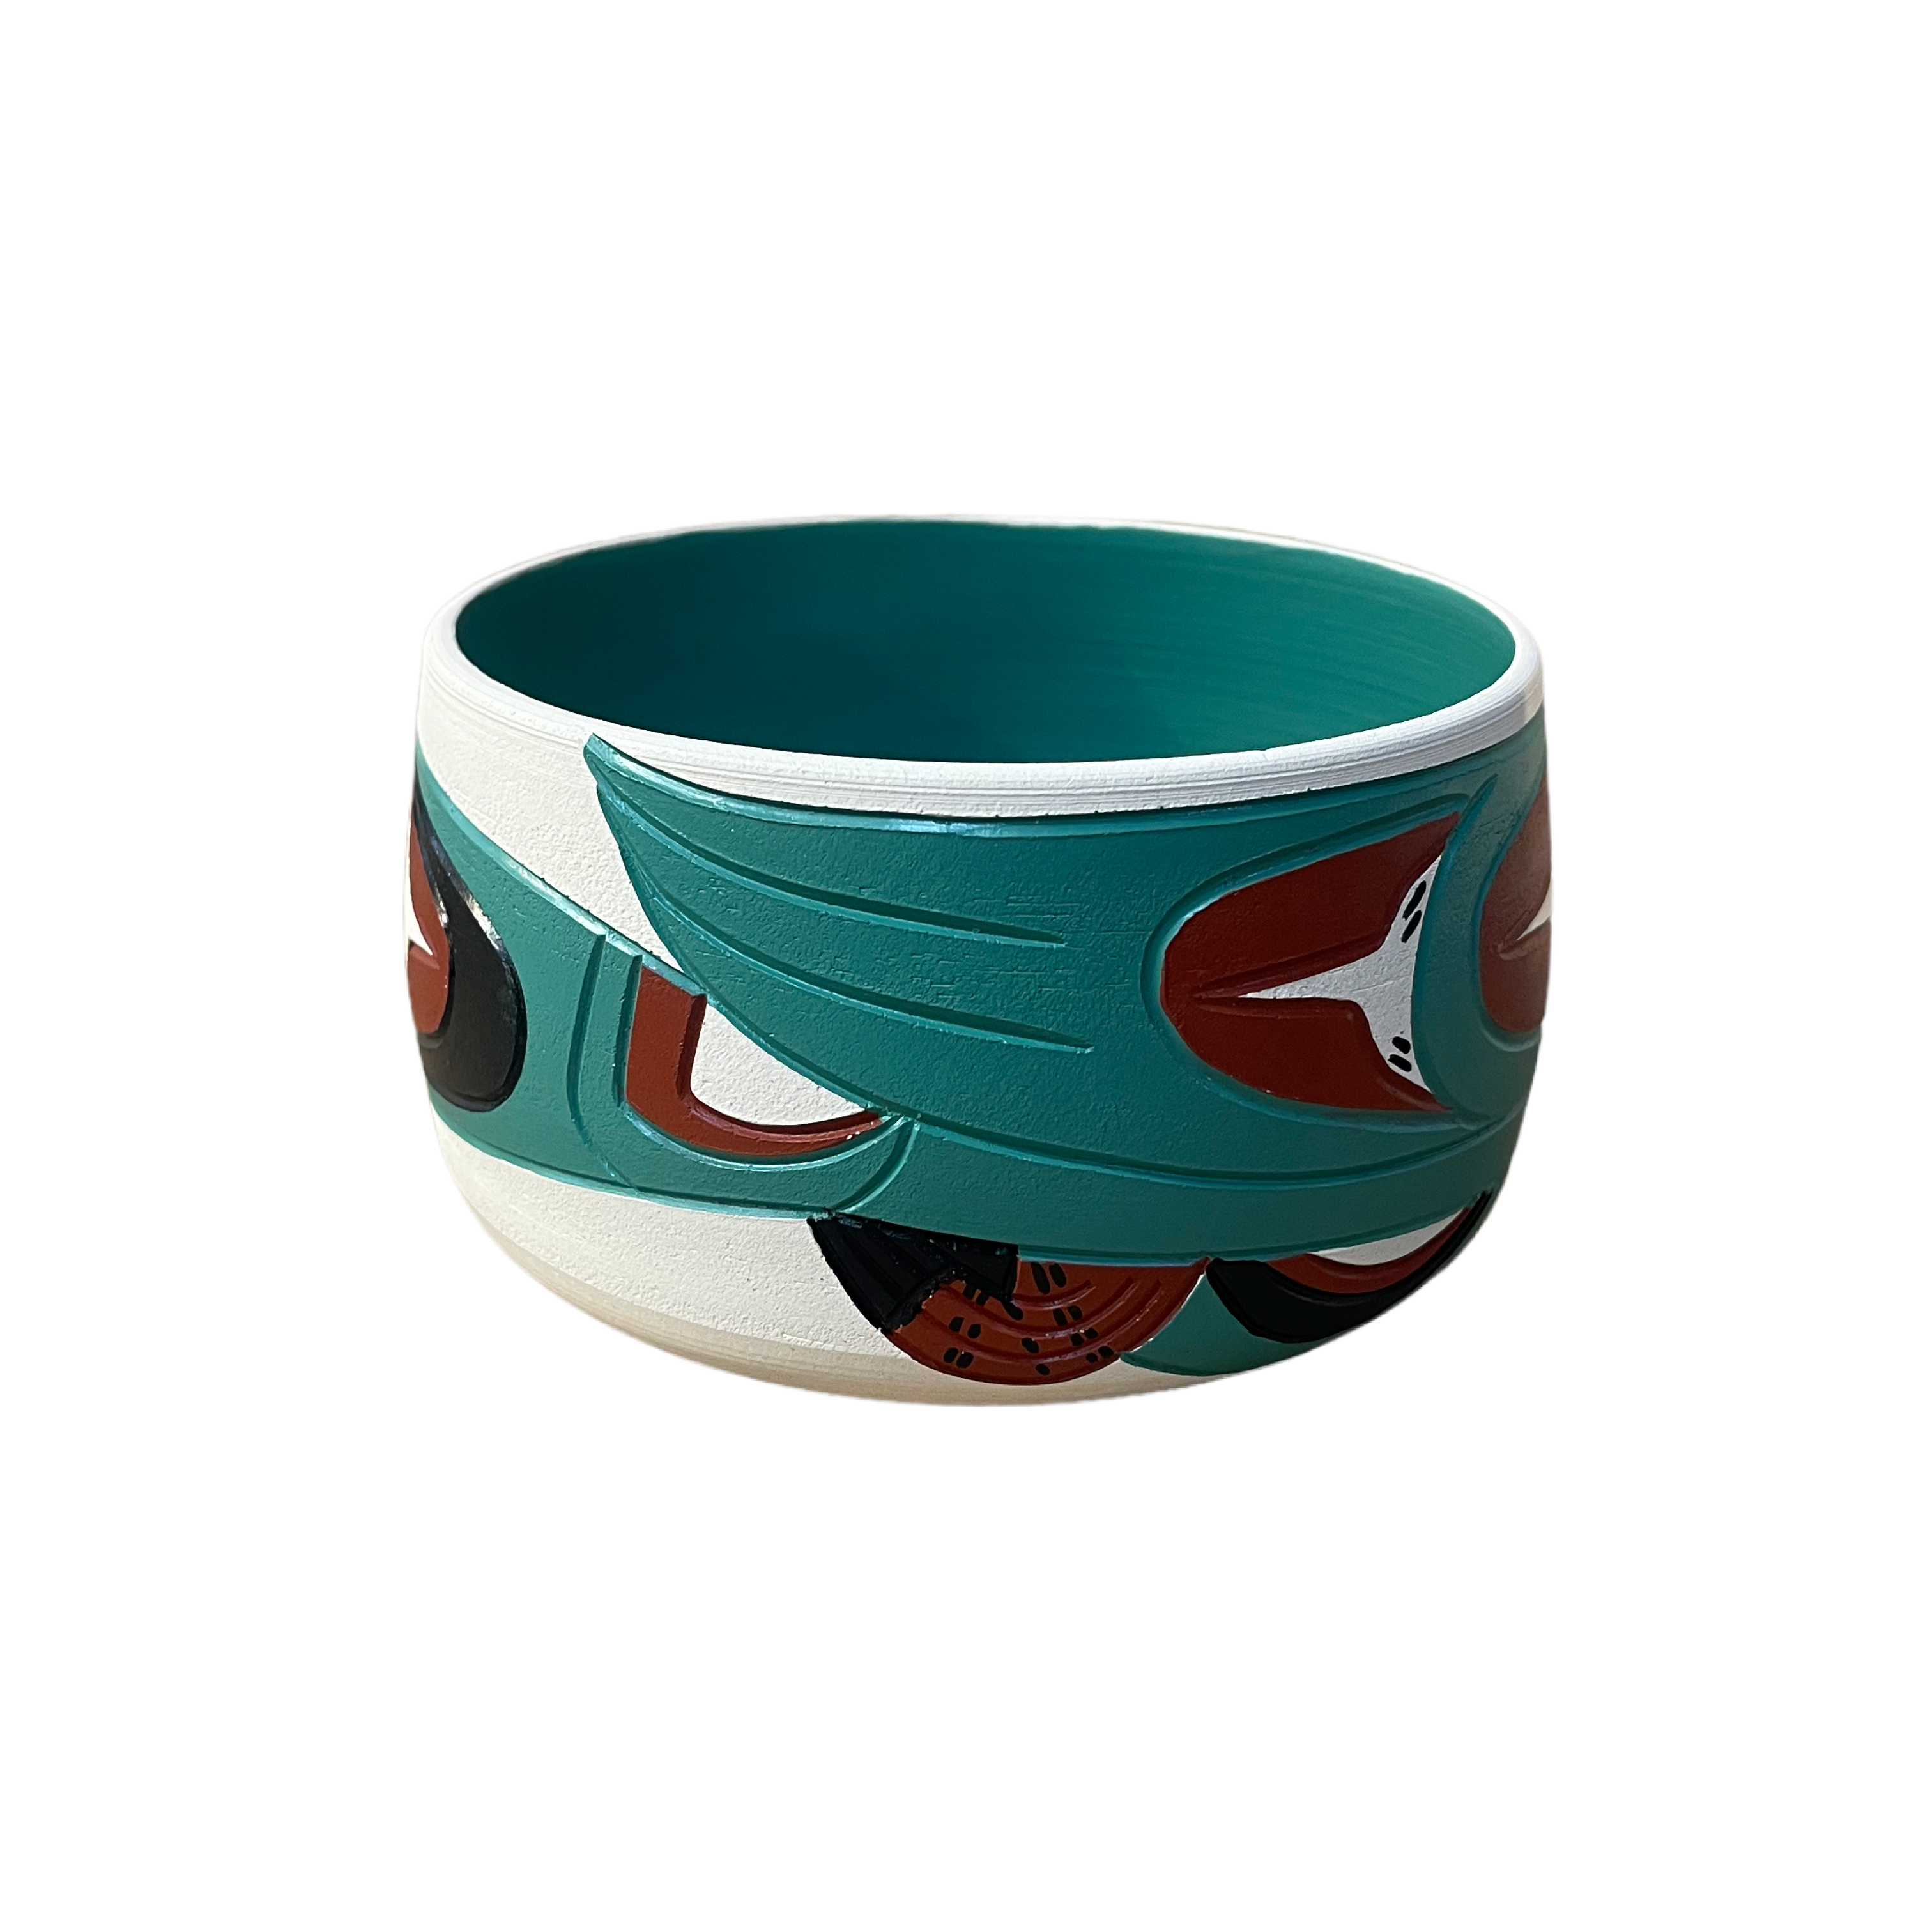 Ceramic Pot - Small - Hummingbird - Teal &amp; Maroon